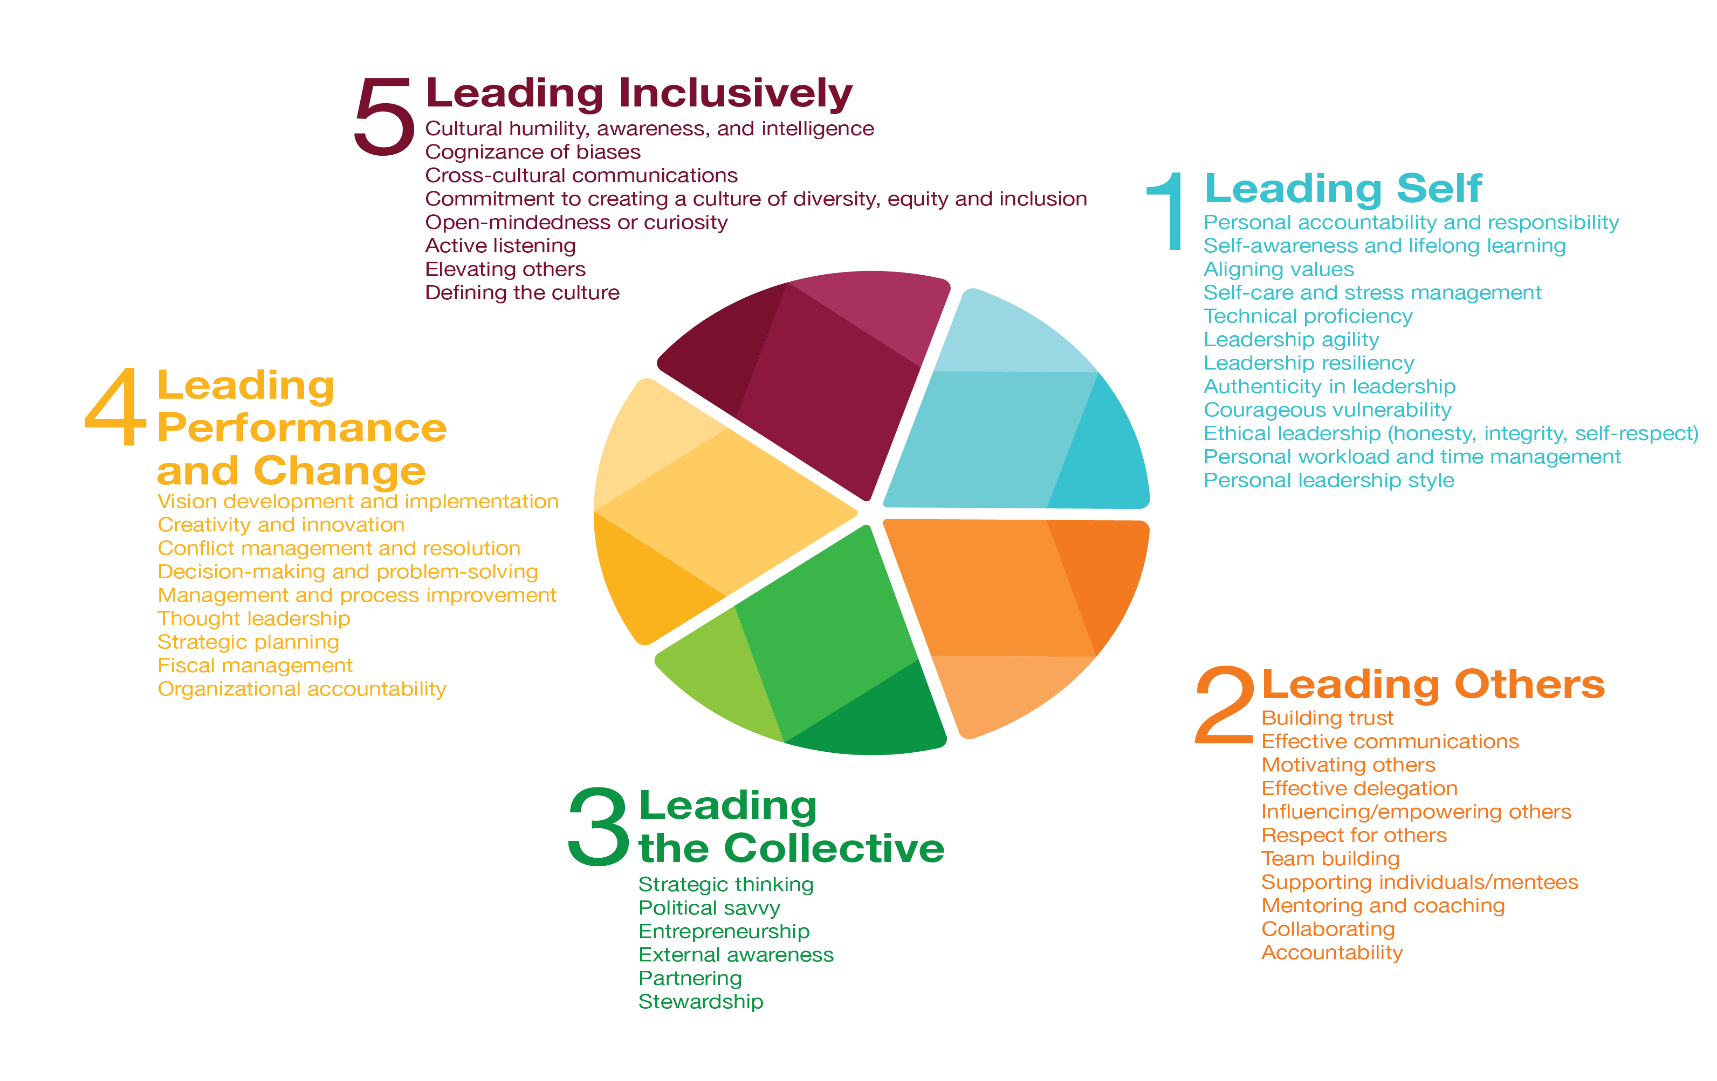 Leadership Mentoring Program Competencies Framework - IMAGE